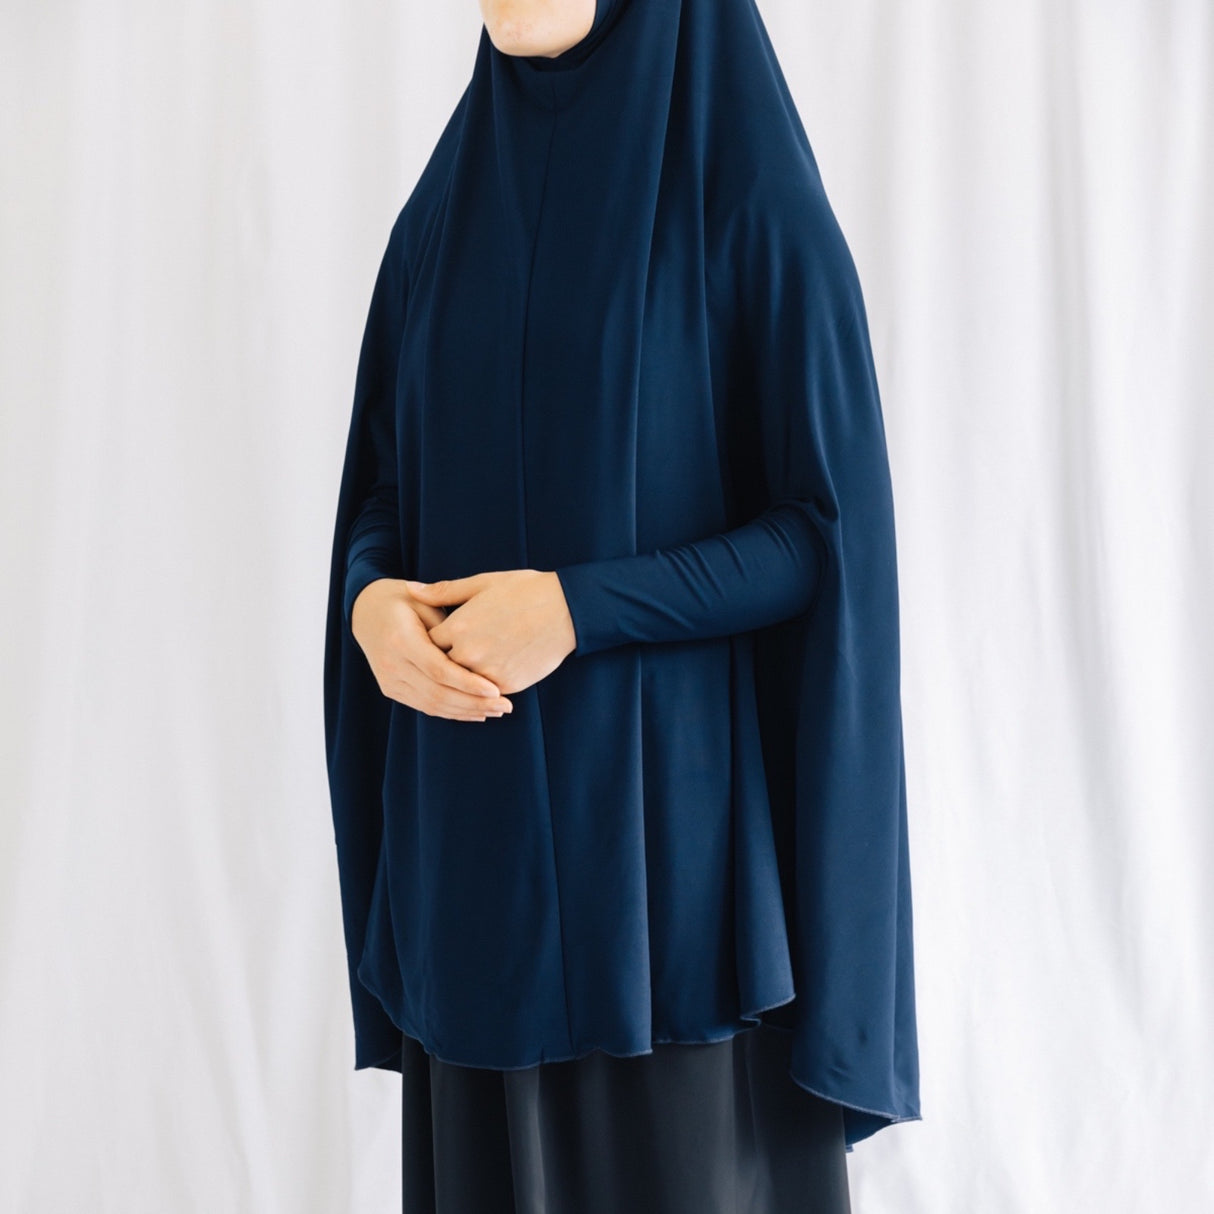 Premium Jilbab Sleeved Navy